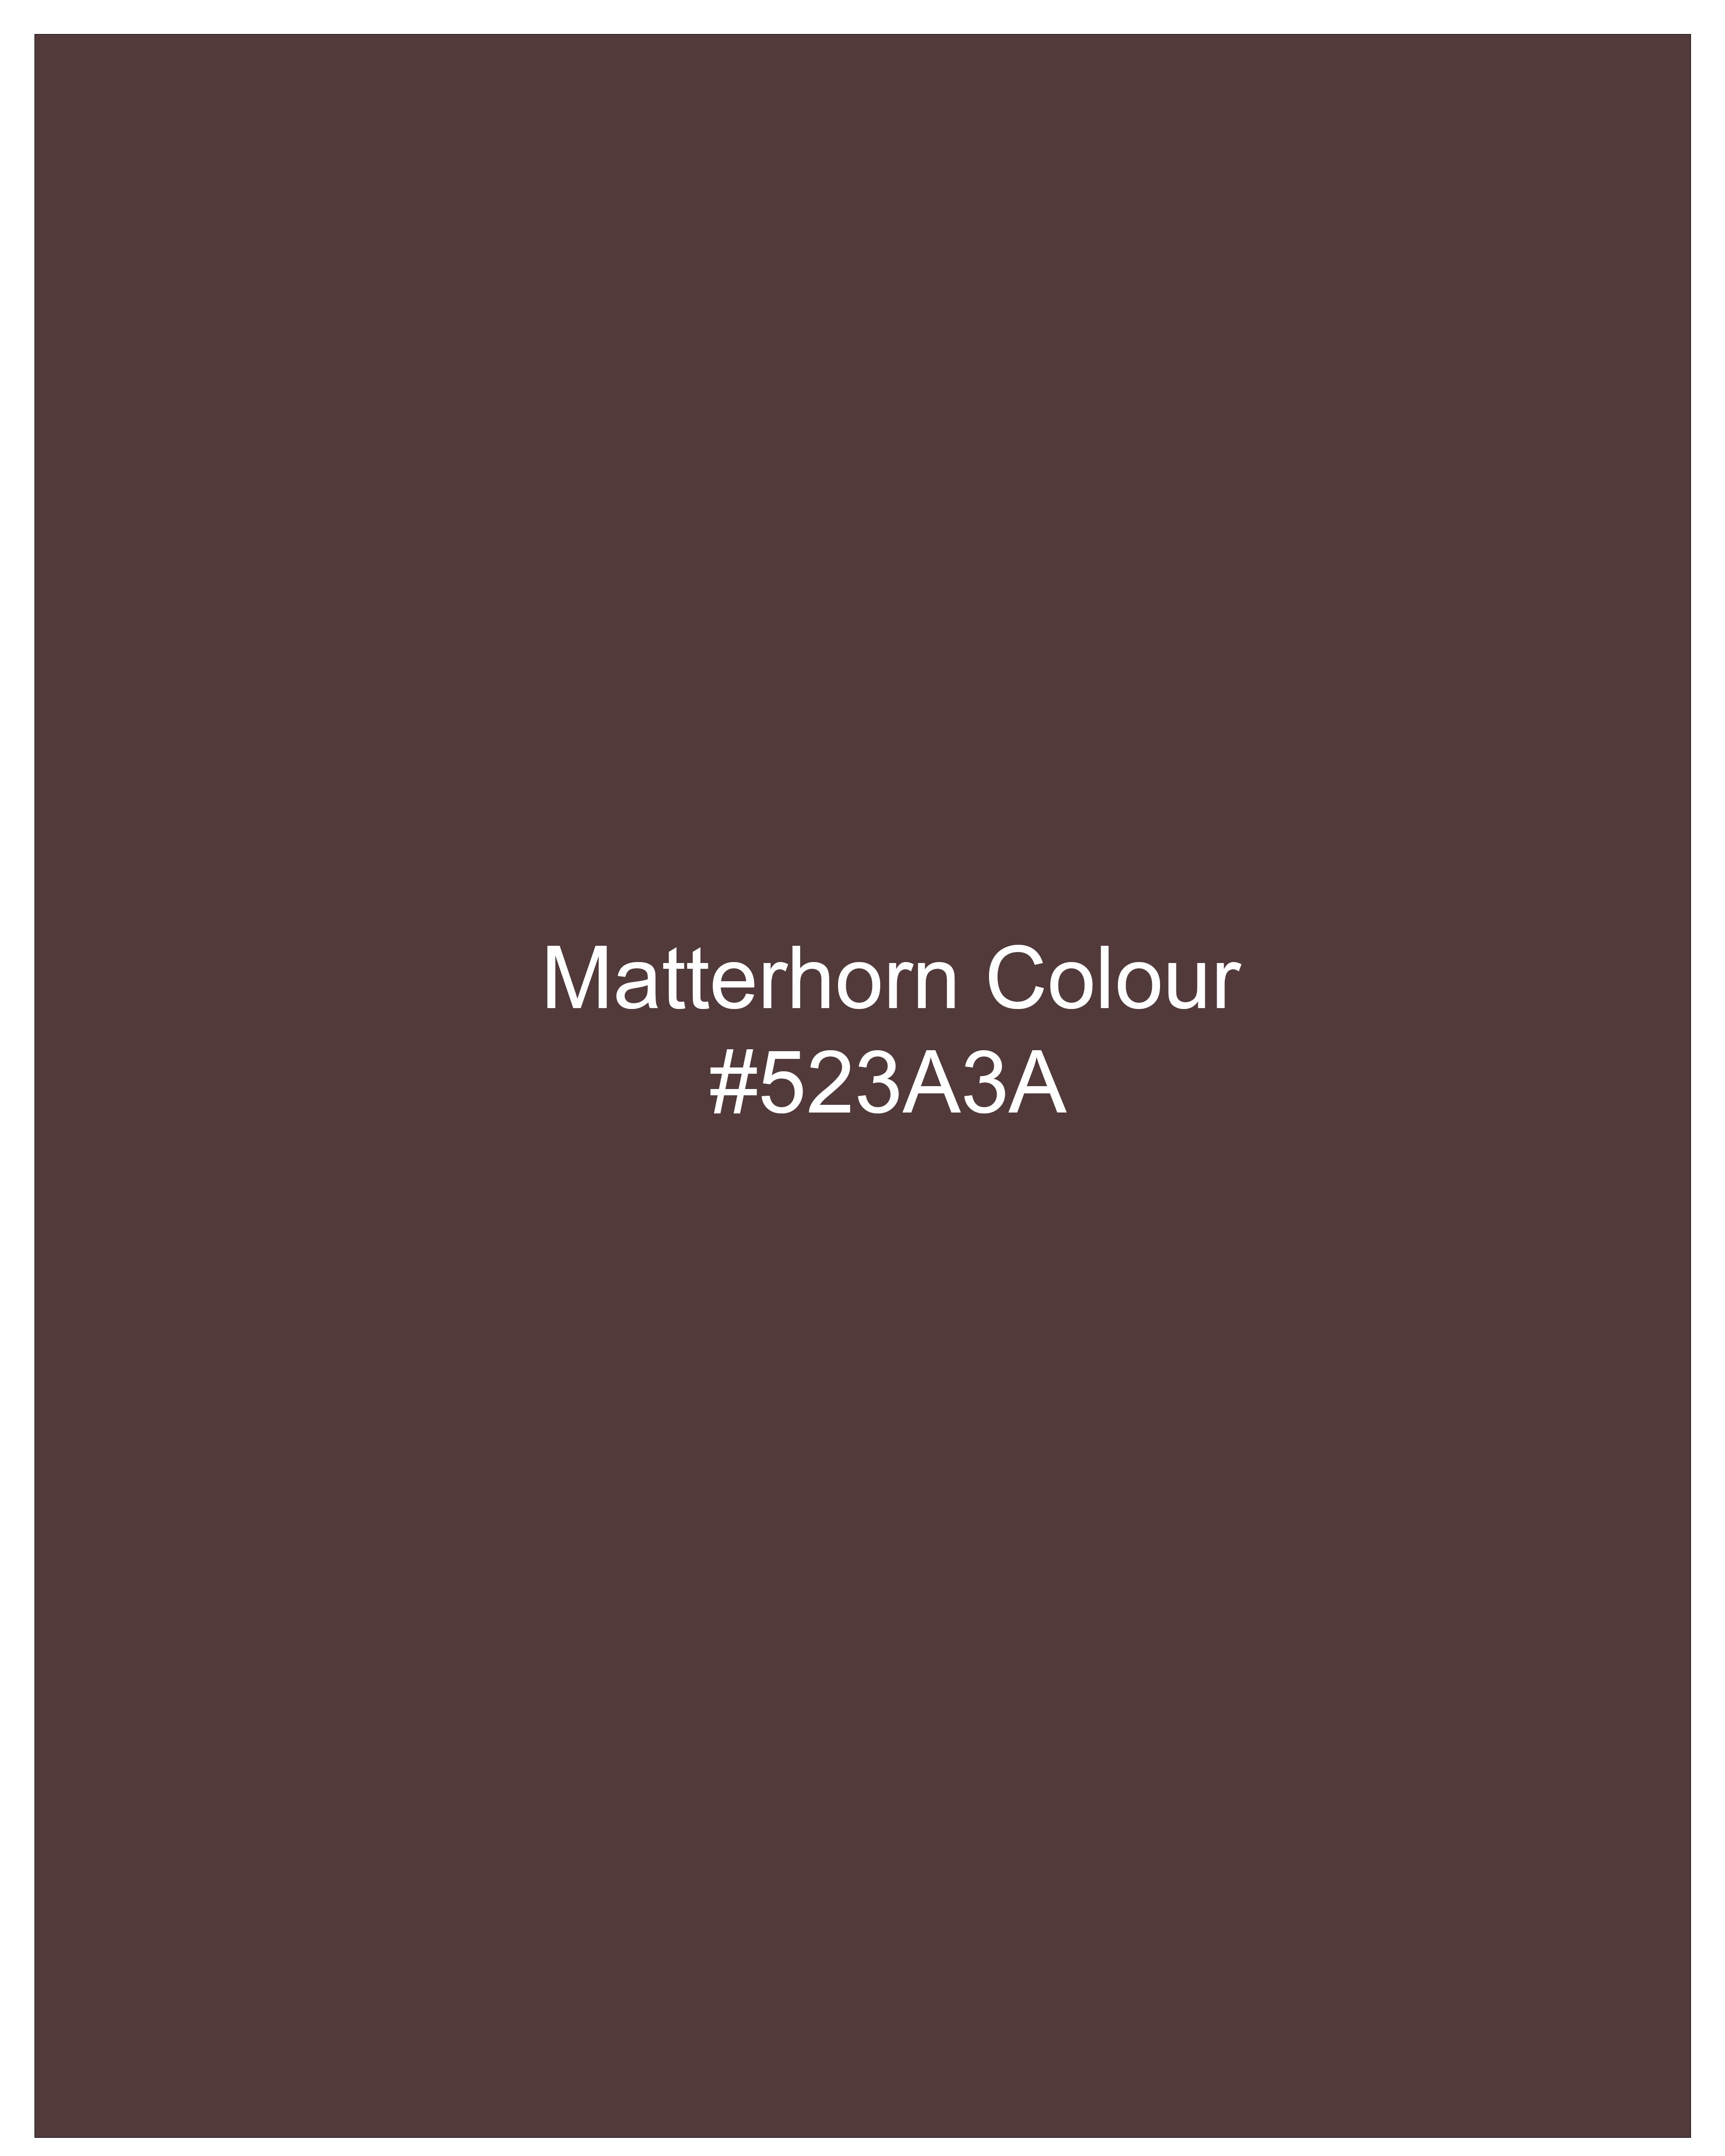 Matterhorn Brown Single Breasted Blazer BL2244-SB-36, BL2244-SB-38, BL2244-SB-40, BL2244-SB-42, BL2244-SB-44, BL2244-SB-46, BL2244-SB-48, BL2244-SB-50, BL2244-SB-52, BL2244-SB-54, BL2244-SB-56, BL2244-SB-58, BL2244-SB-60